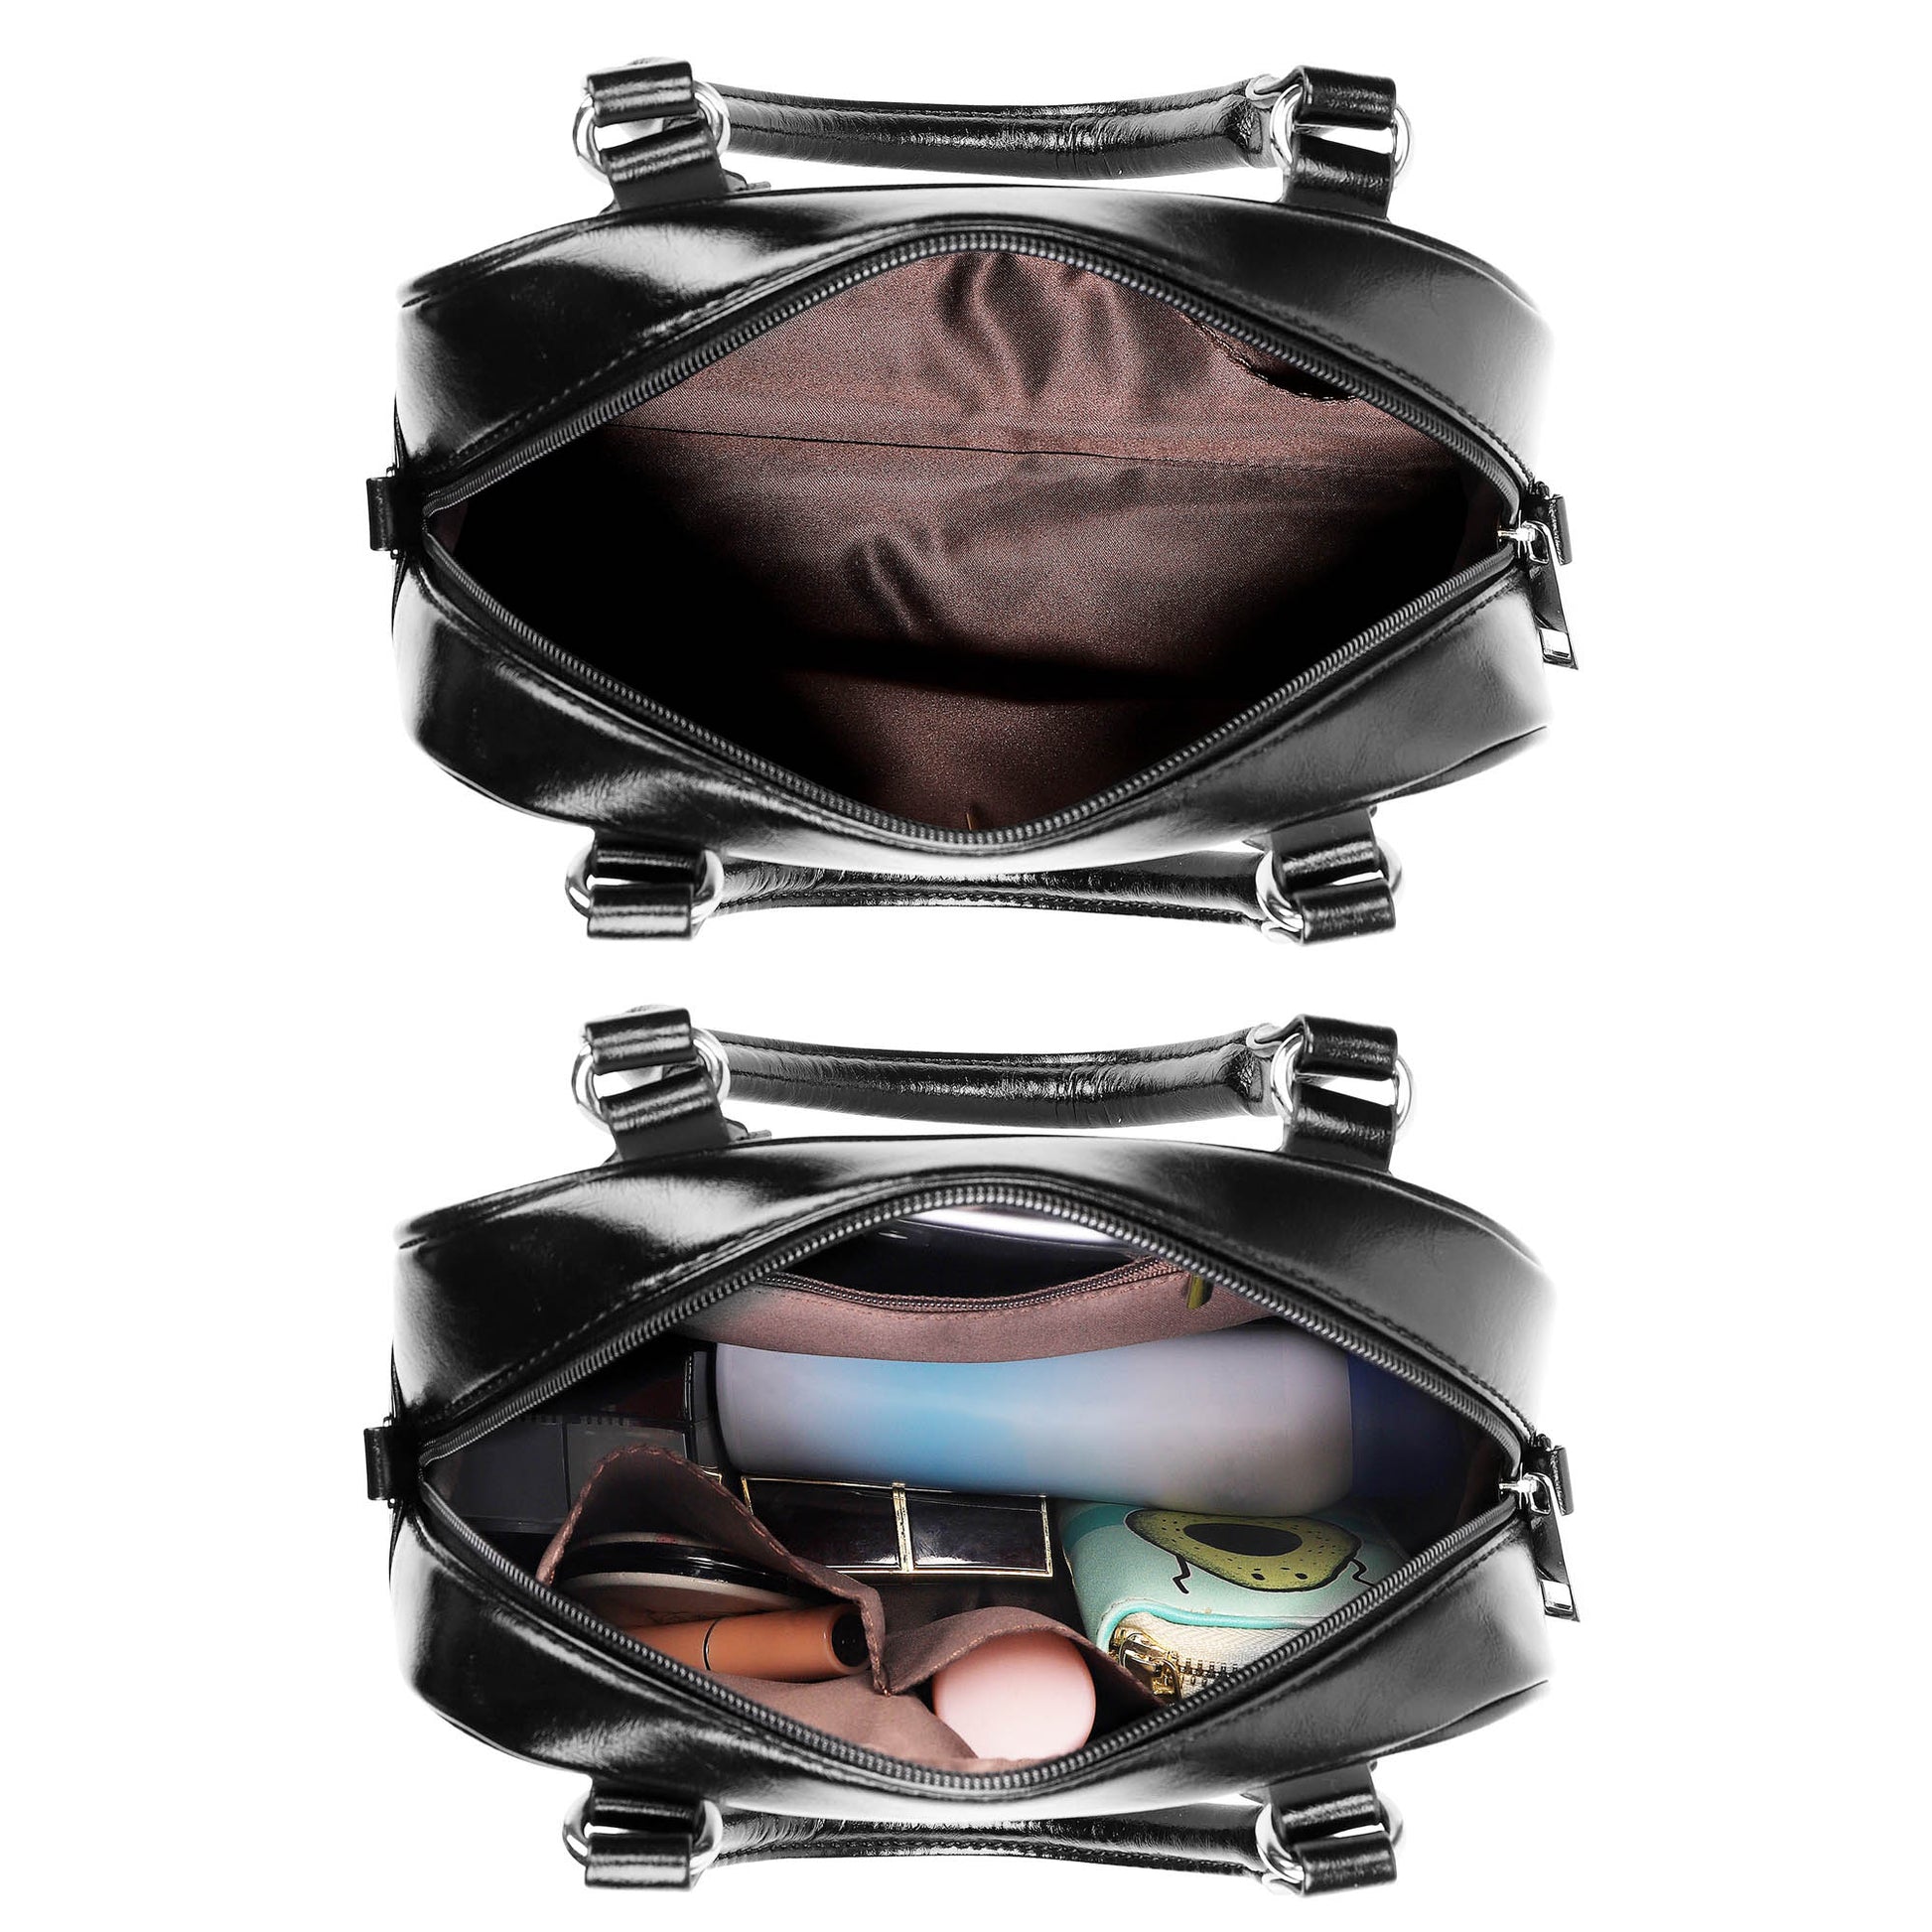 Chattan Tartan Shoulder Handbags with Family Crest - Tartanvibesclothing